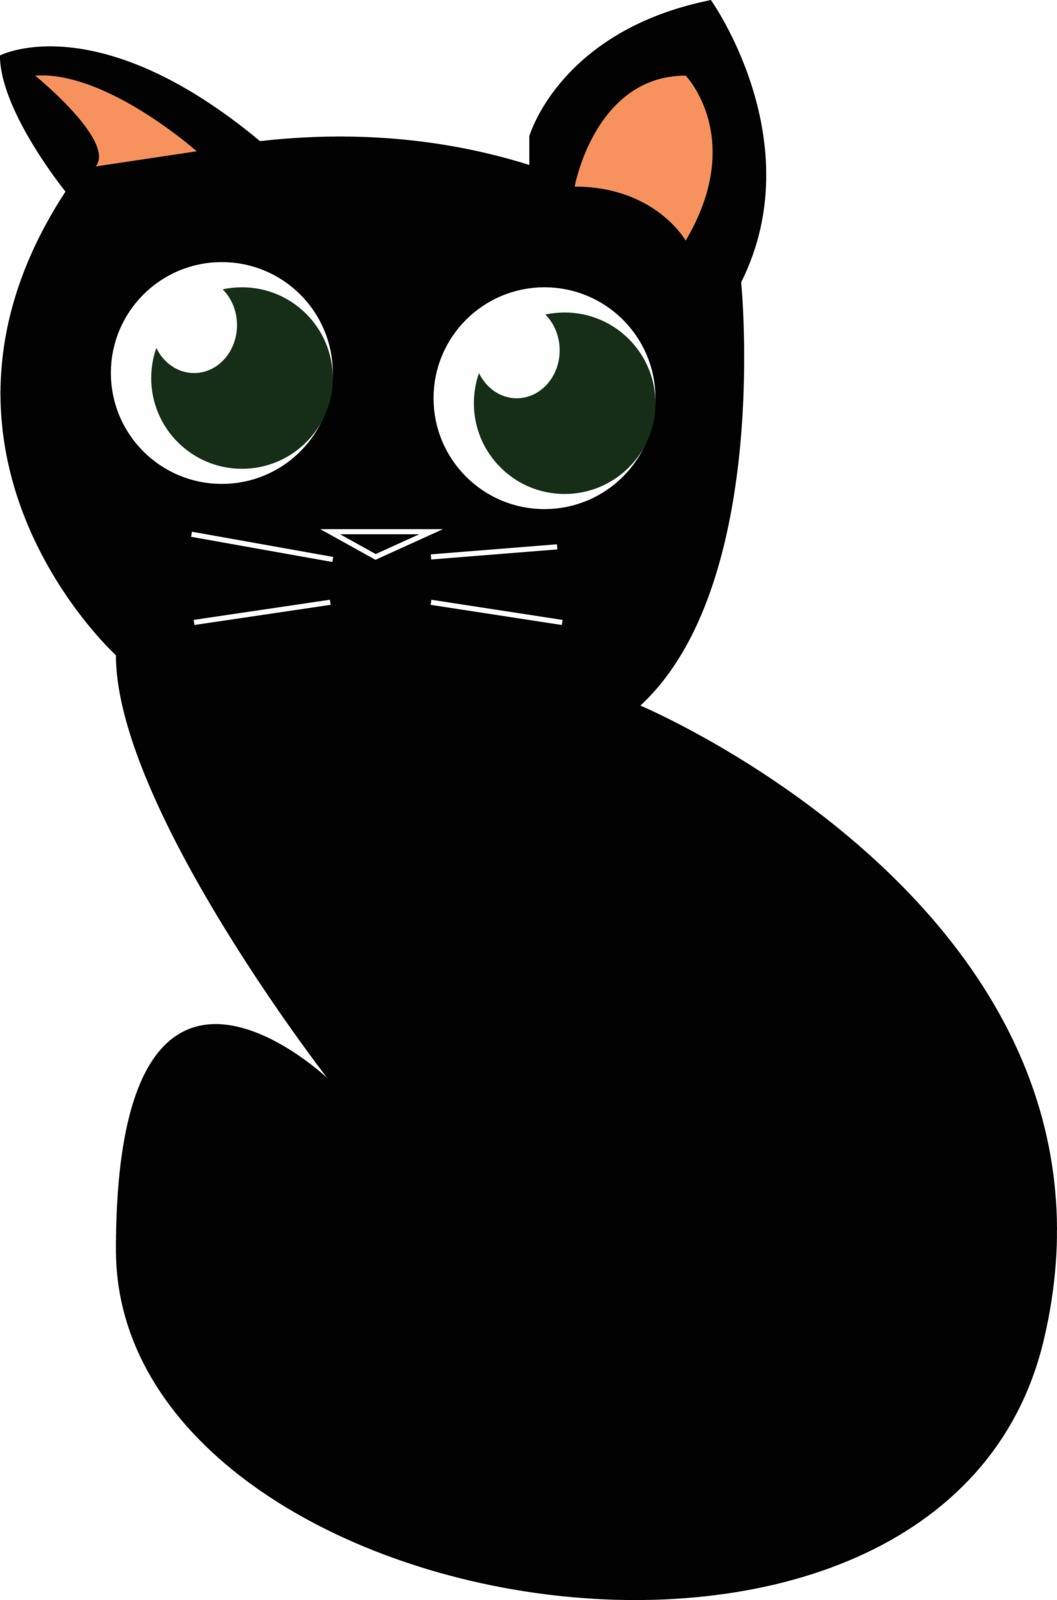 A black kitten vector or color illustration by Morphart